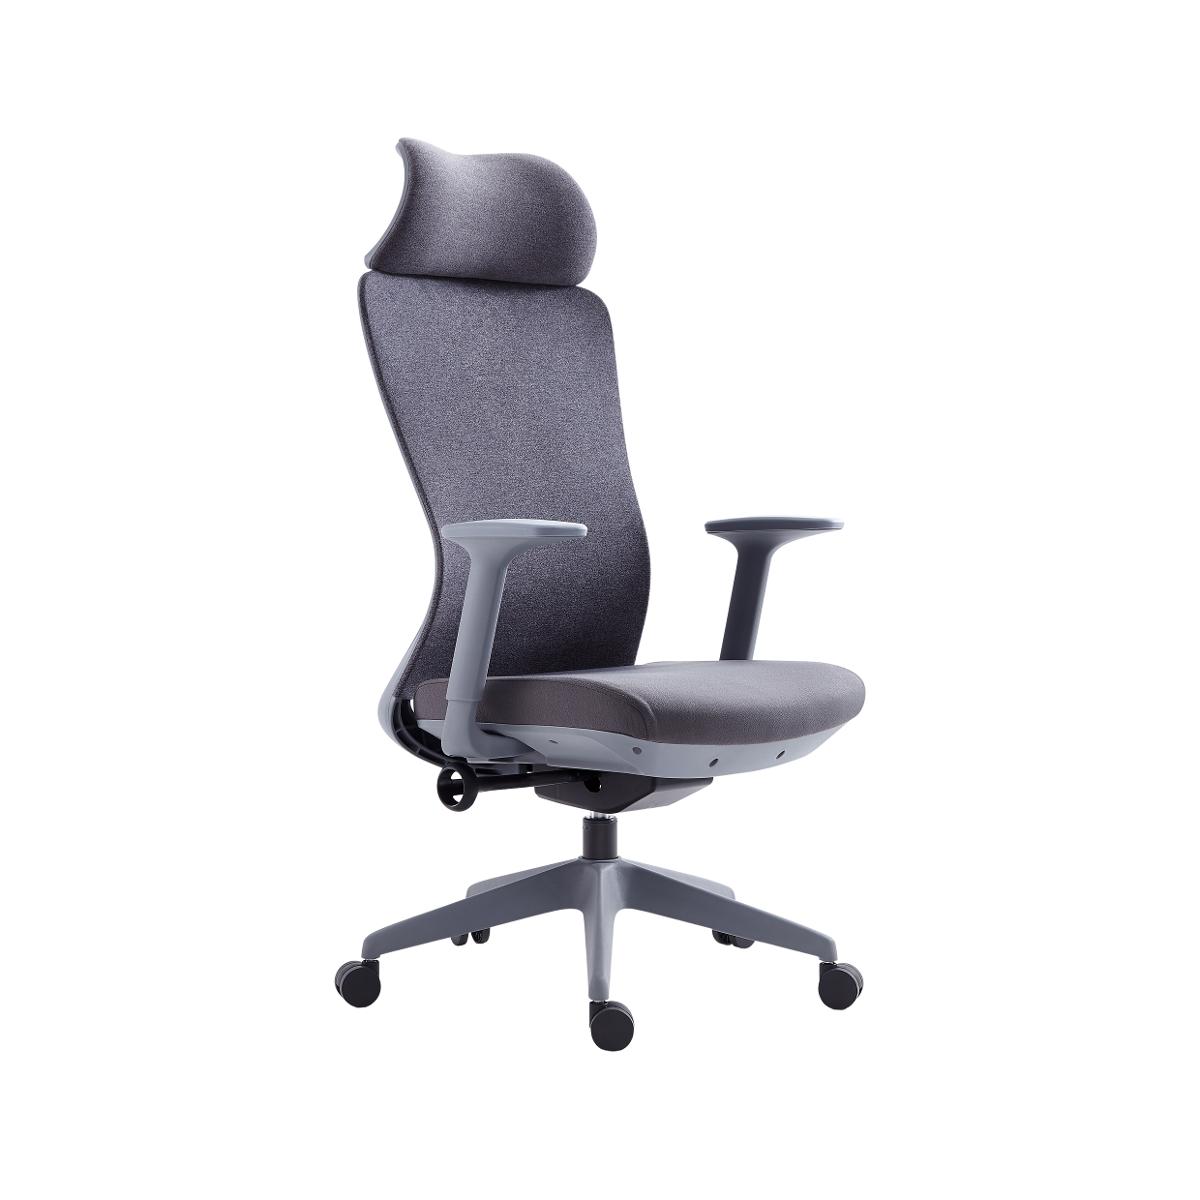 Super Chair เก้าอี้ผู้บริหาร รุ่น M123-3  H Grey